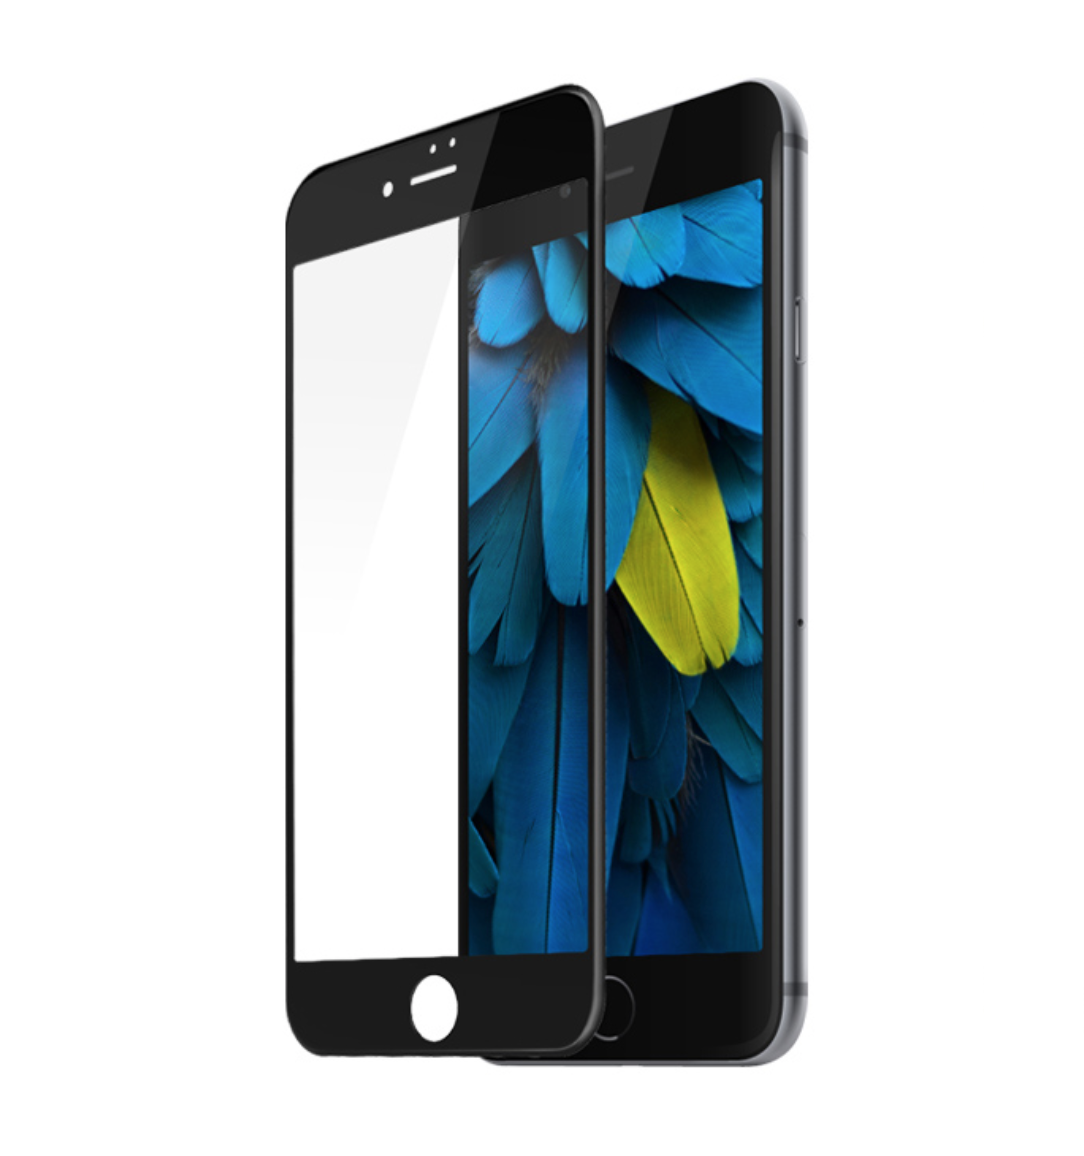 4D tvrzené sklo Clearo na celý displej pro Apple iPhone 6 PLUS/6S PLUS, černé